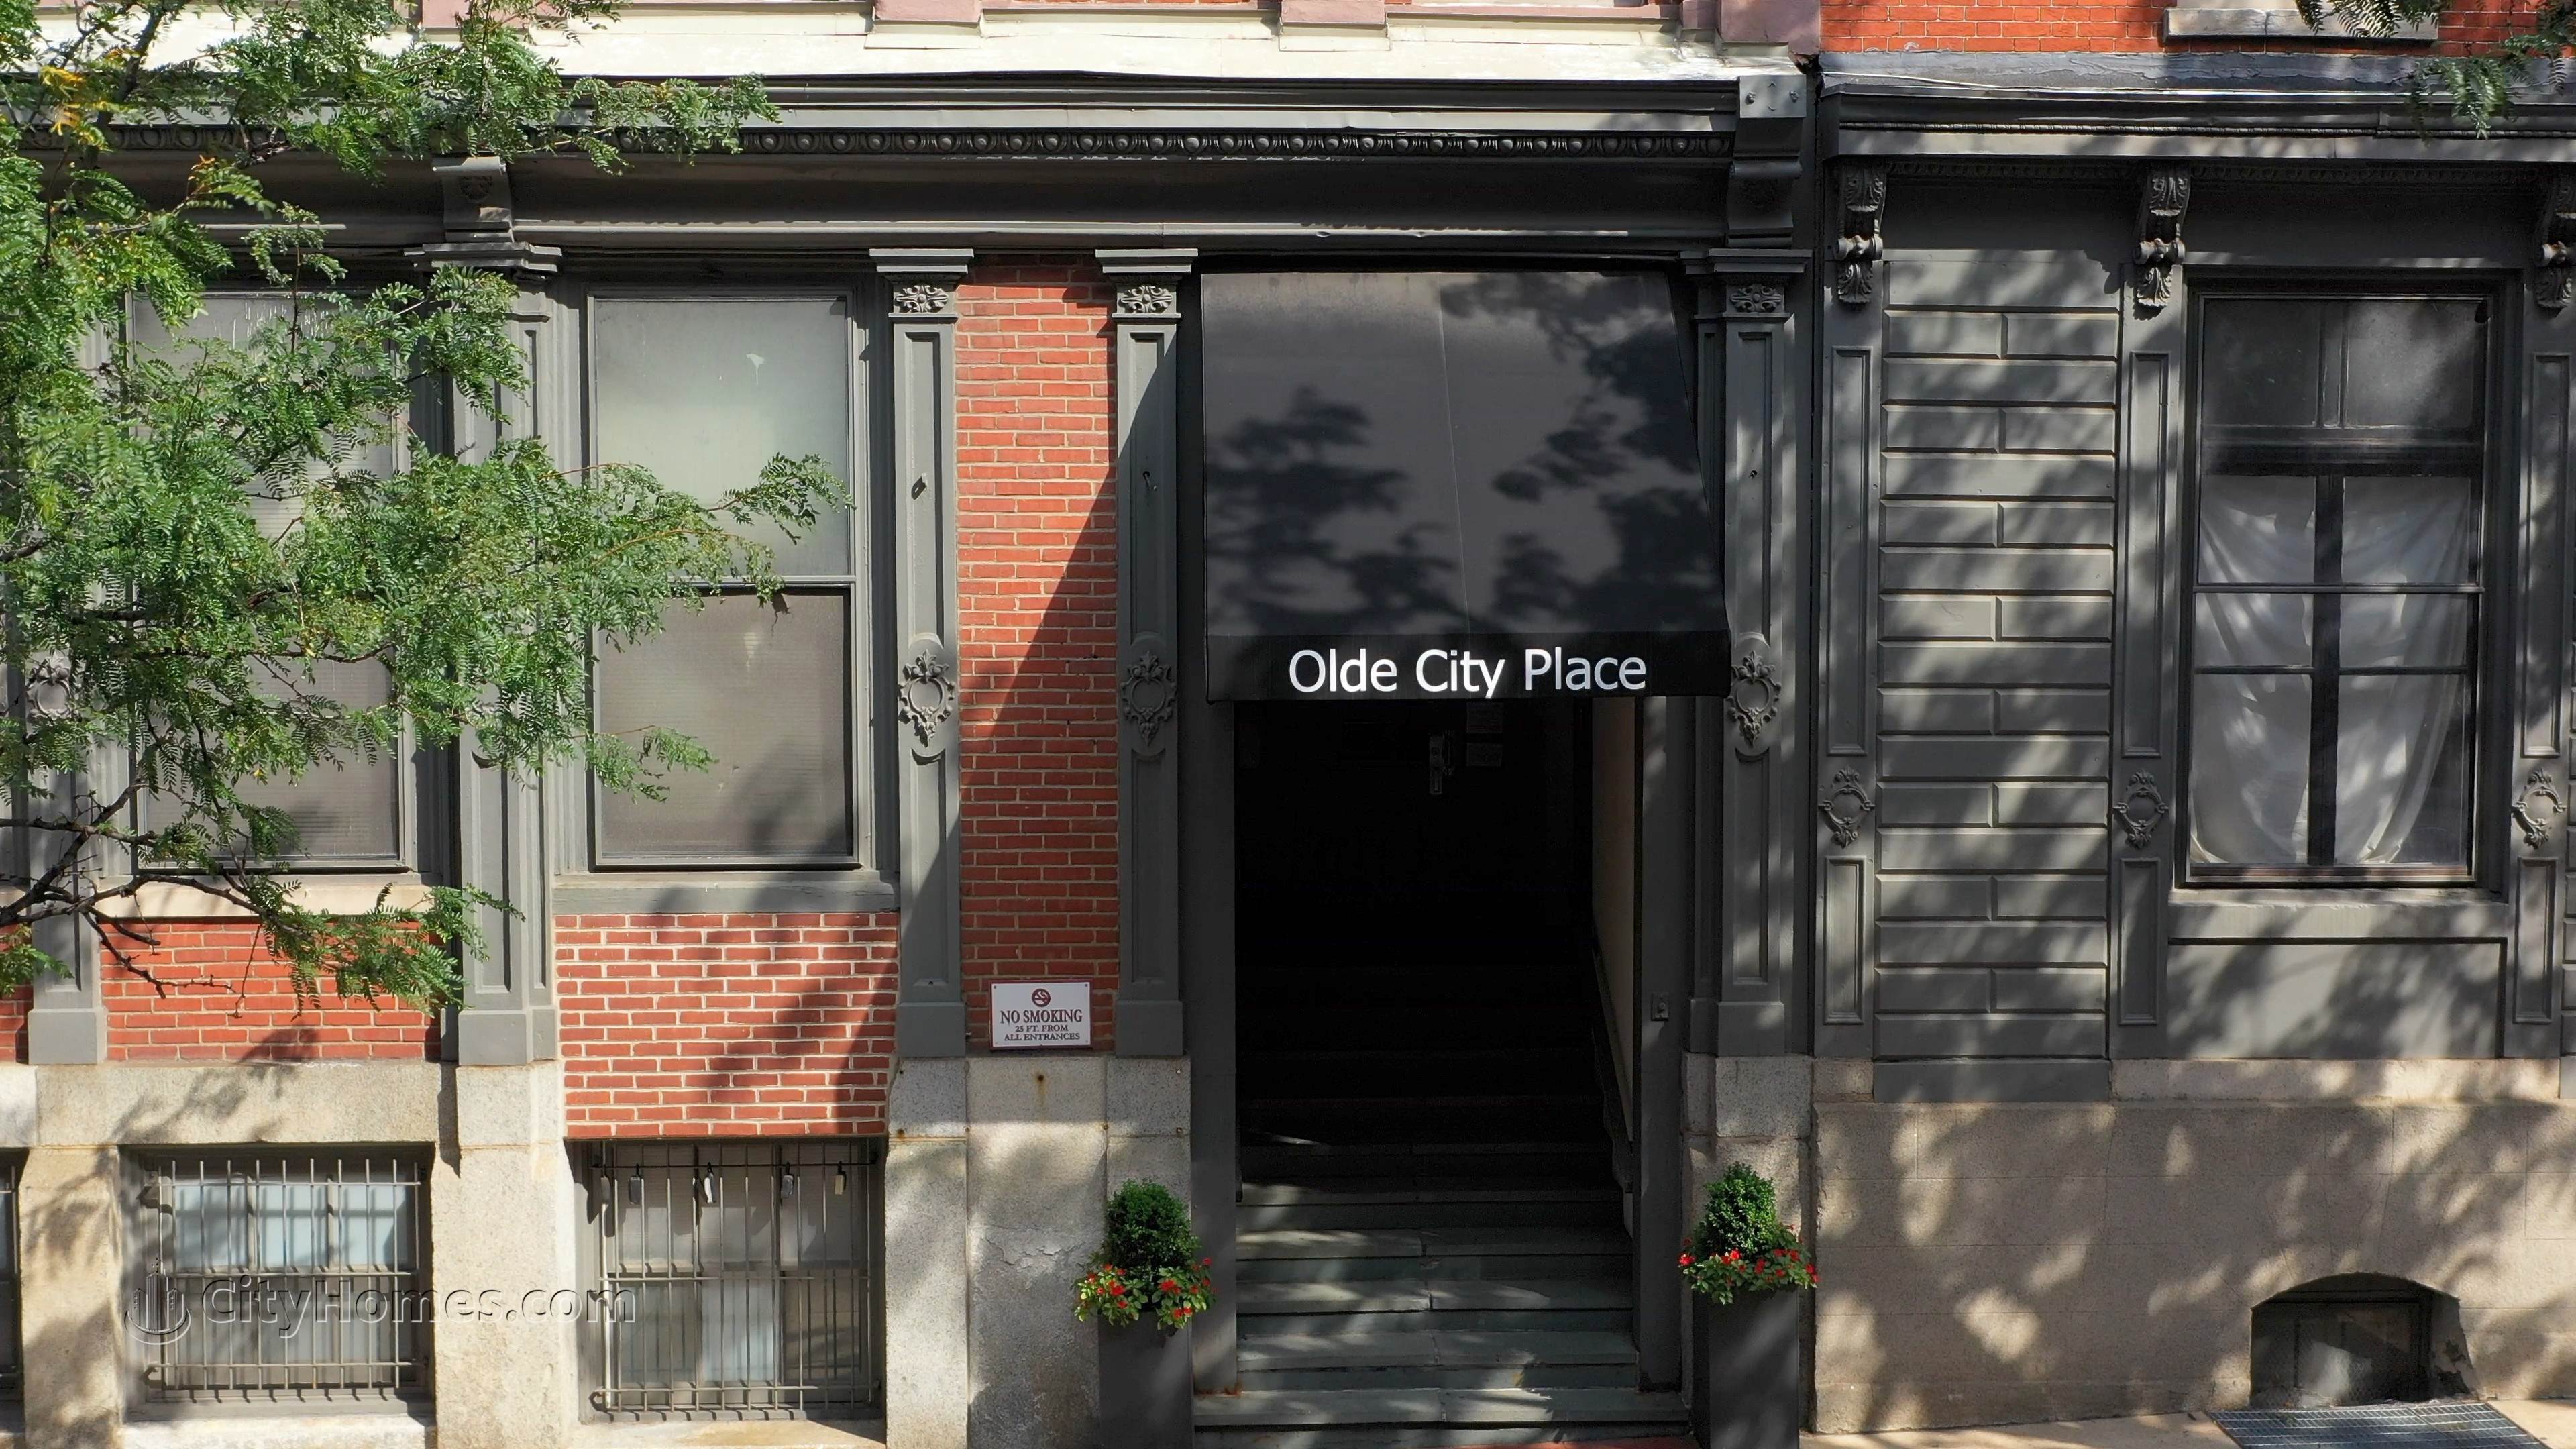 Olde City Place建于 205-11 N 4th St, Old City, 费城, PA 19106